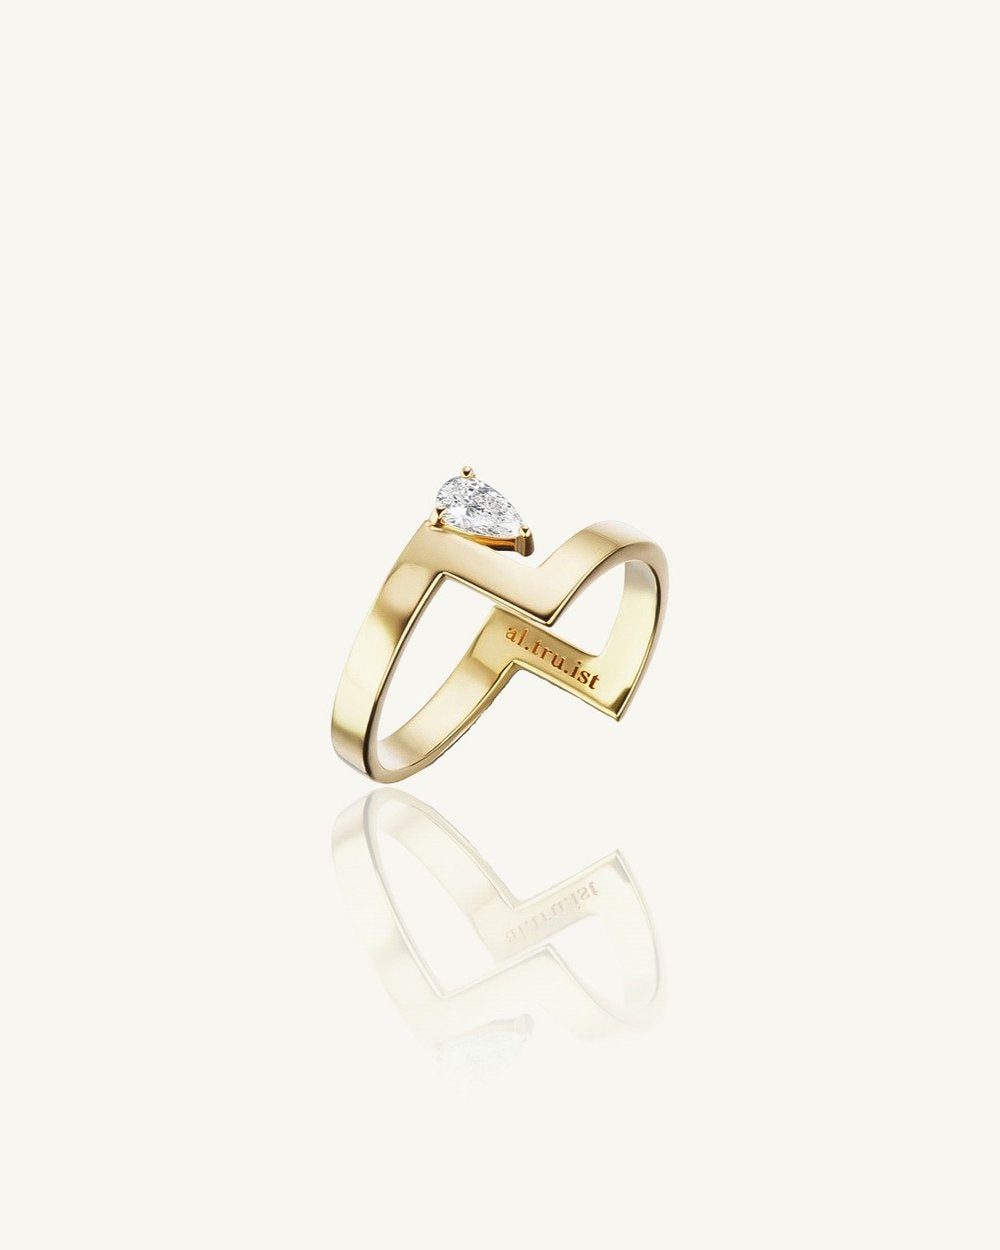 ALTRUIST Bonaparte Diamond Ring